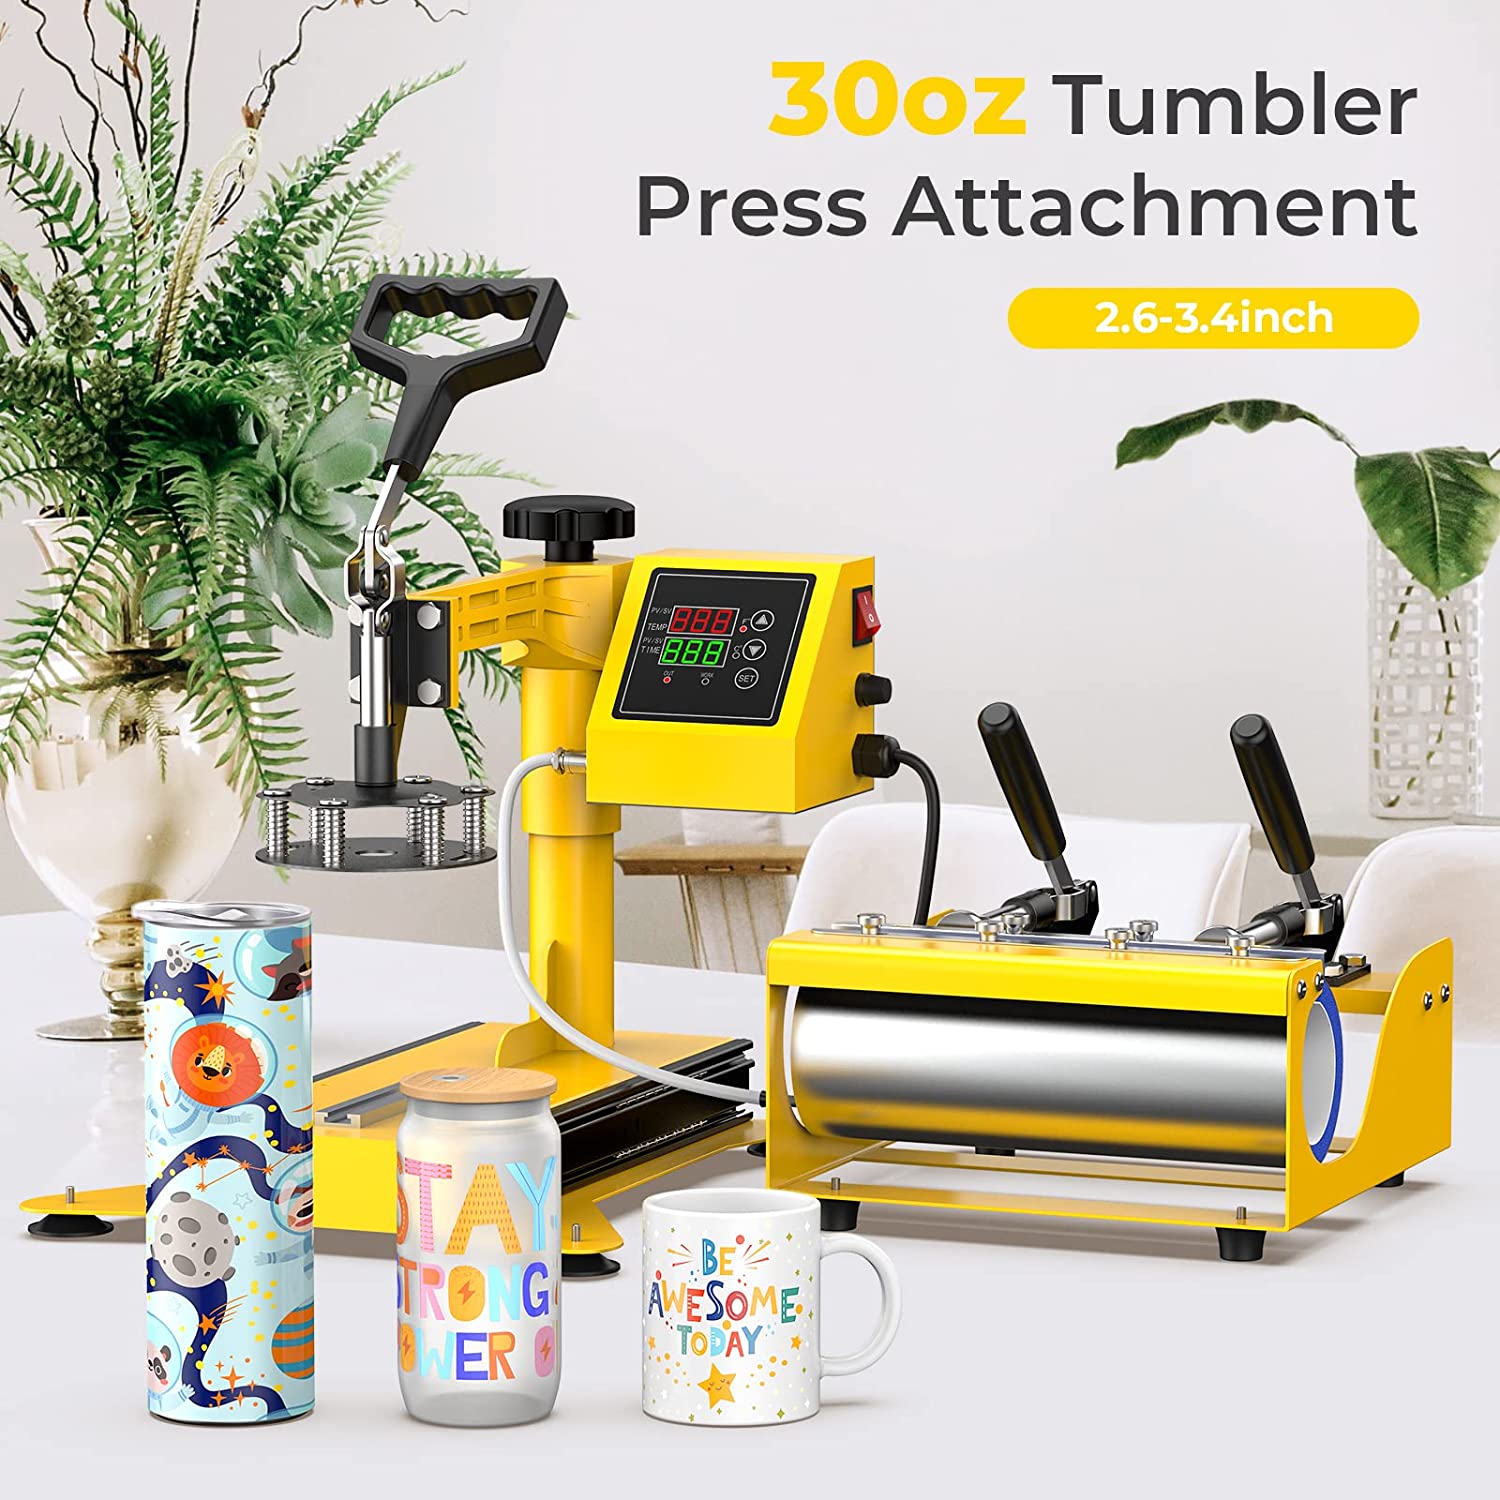 EnjoyColor Multifunction Heat Press Machine – Professional Tumbler